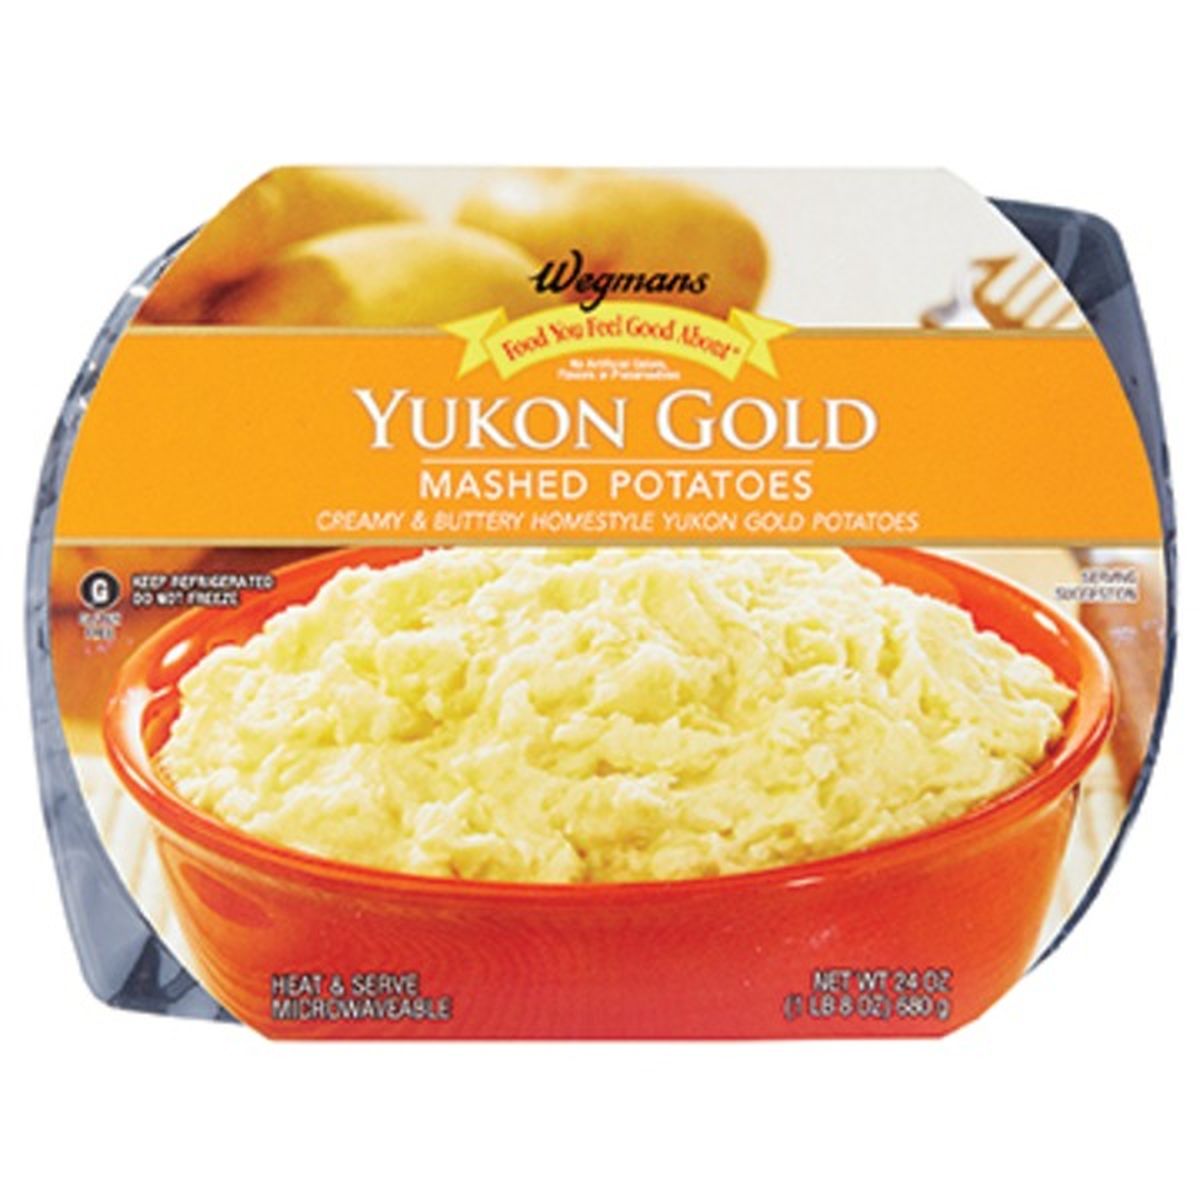 Calories in Wegmans Yukon Gold Mashed Potatoes